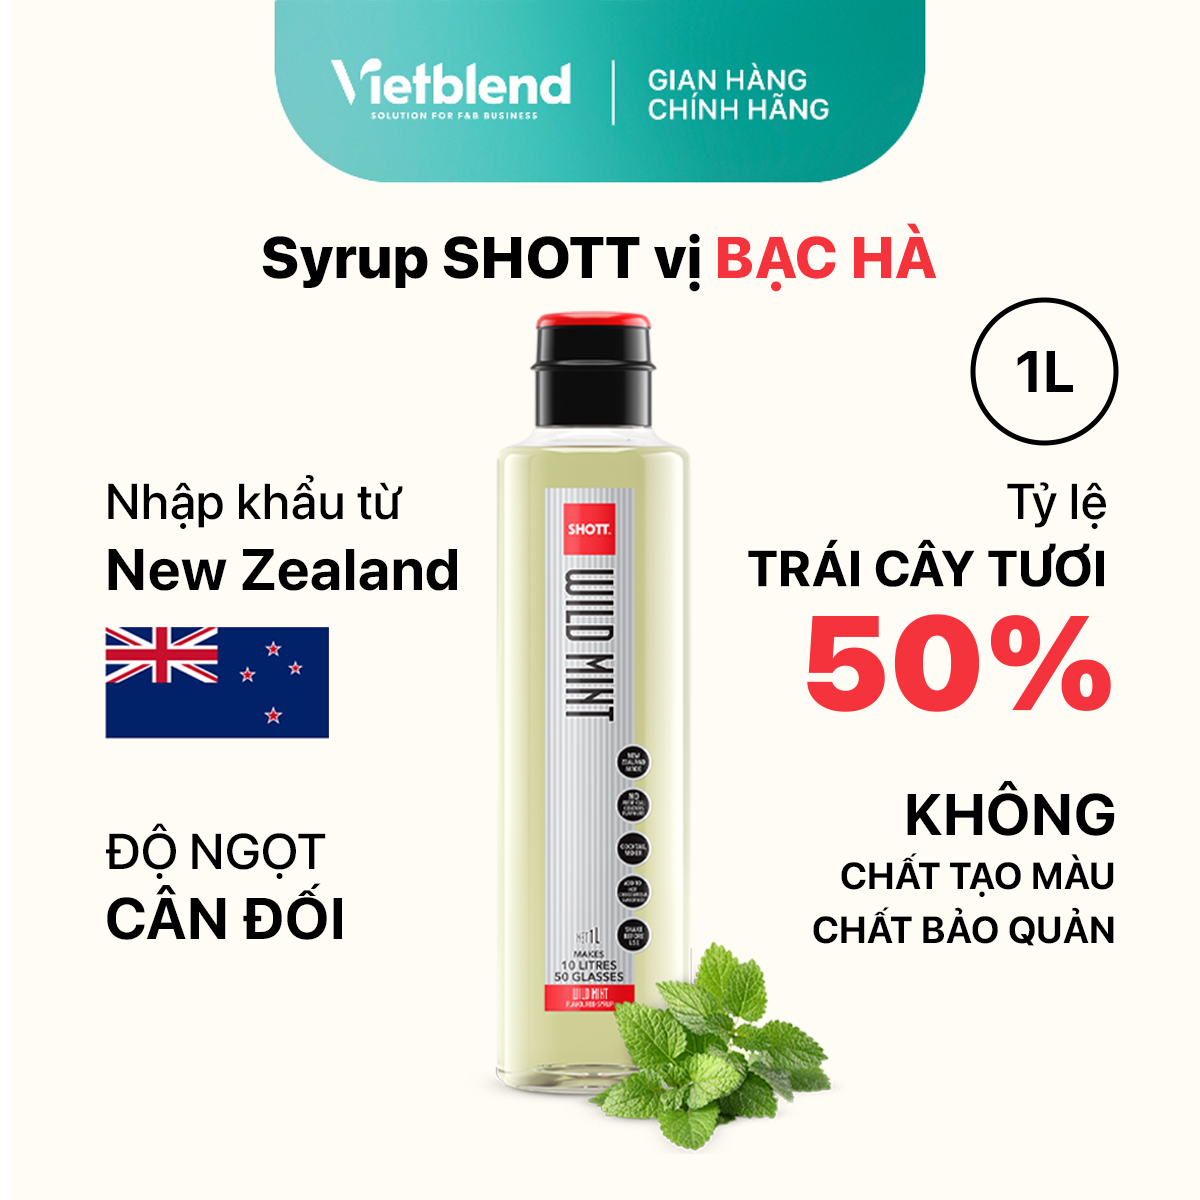 SHOTT Syrup - Wild Mint Flavor - 1L Bottle